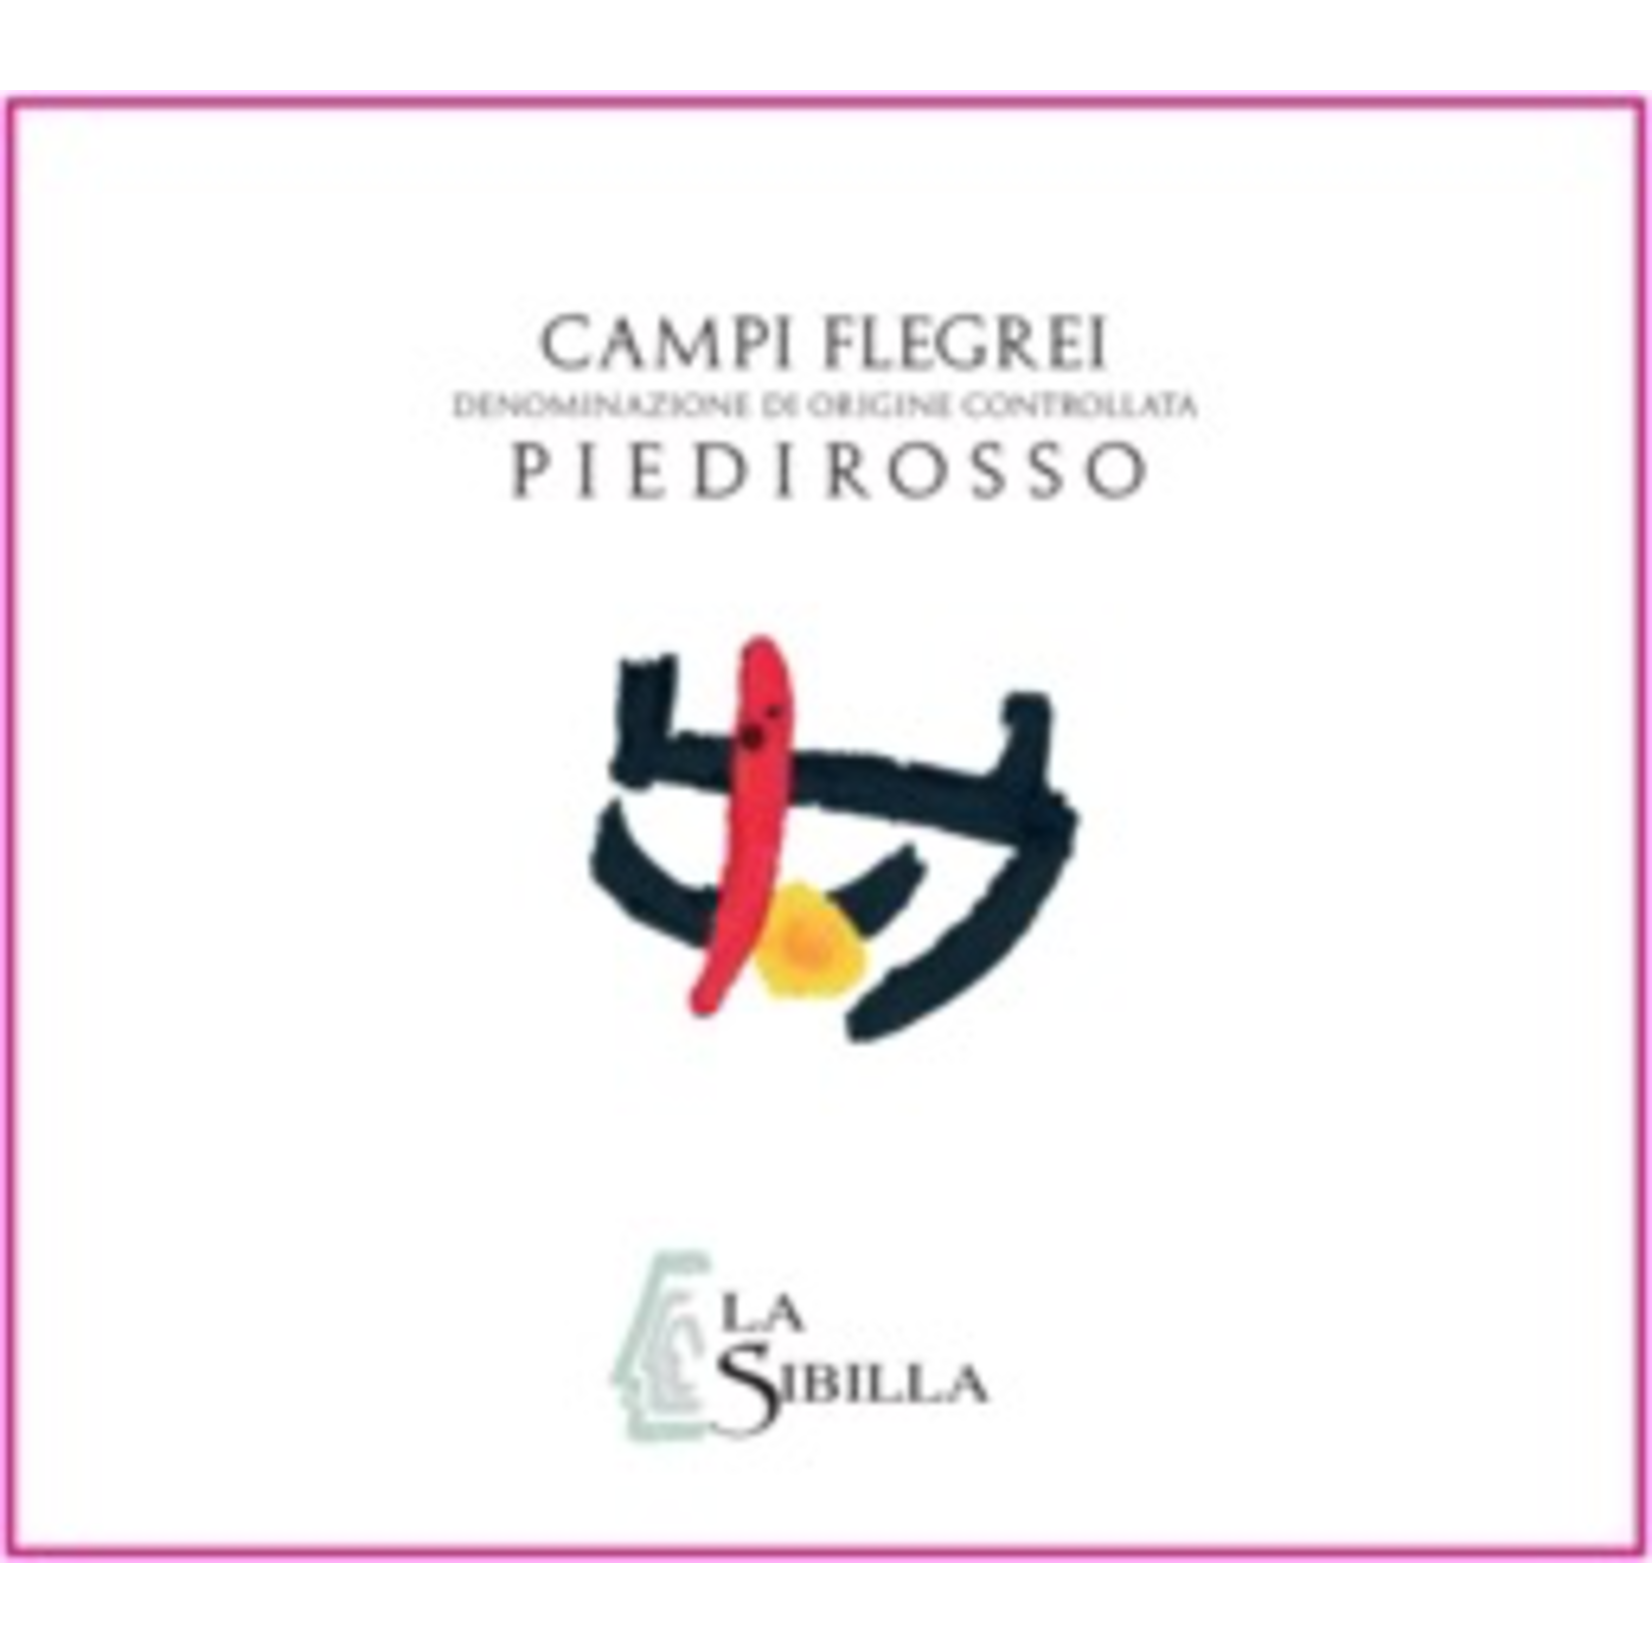 Wine La Sibilla Campi Flegrei Piedirosso 2020